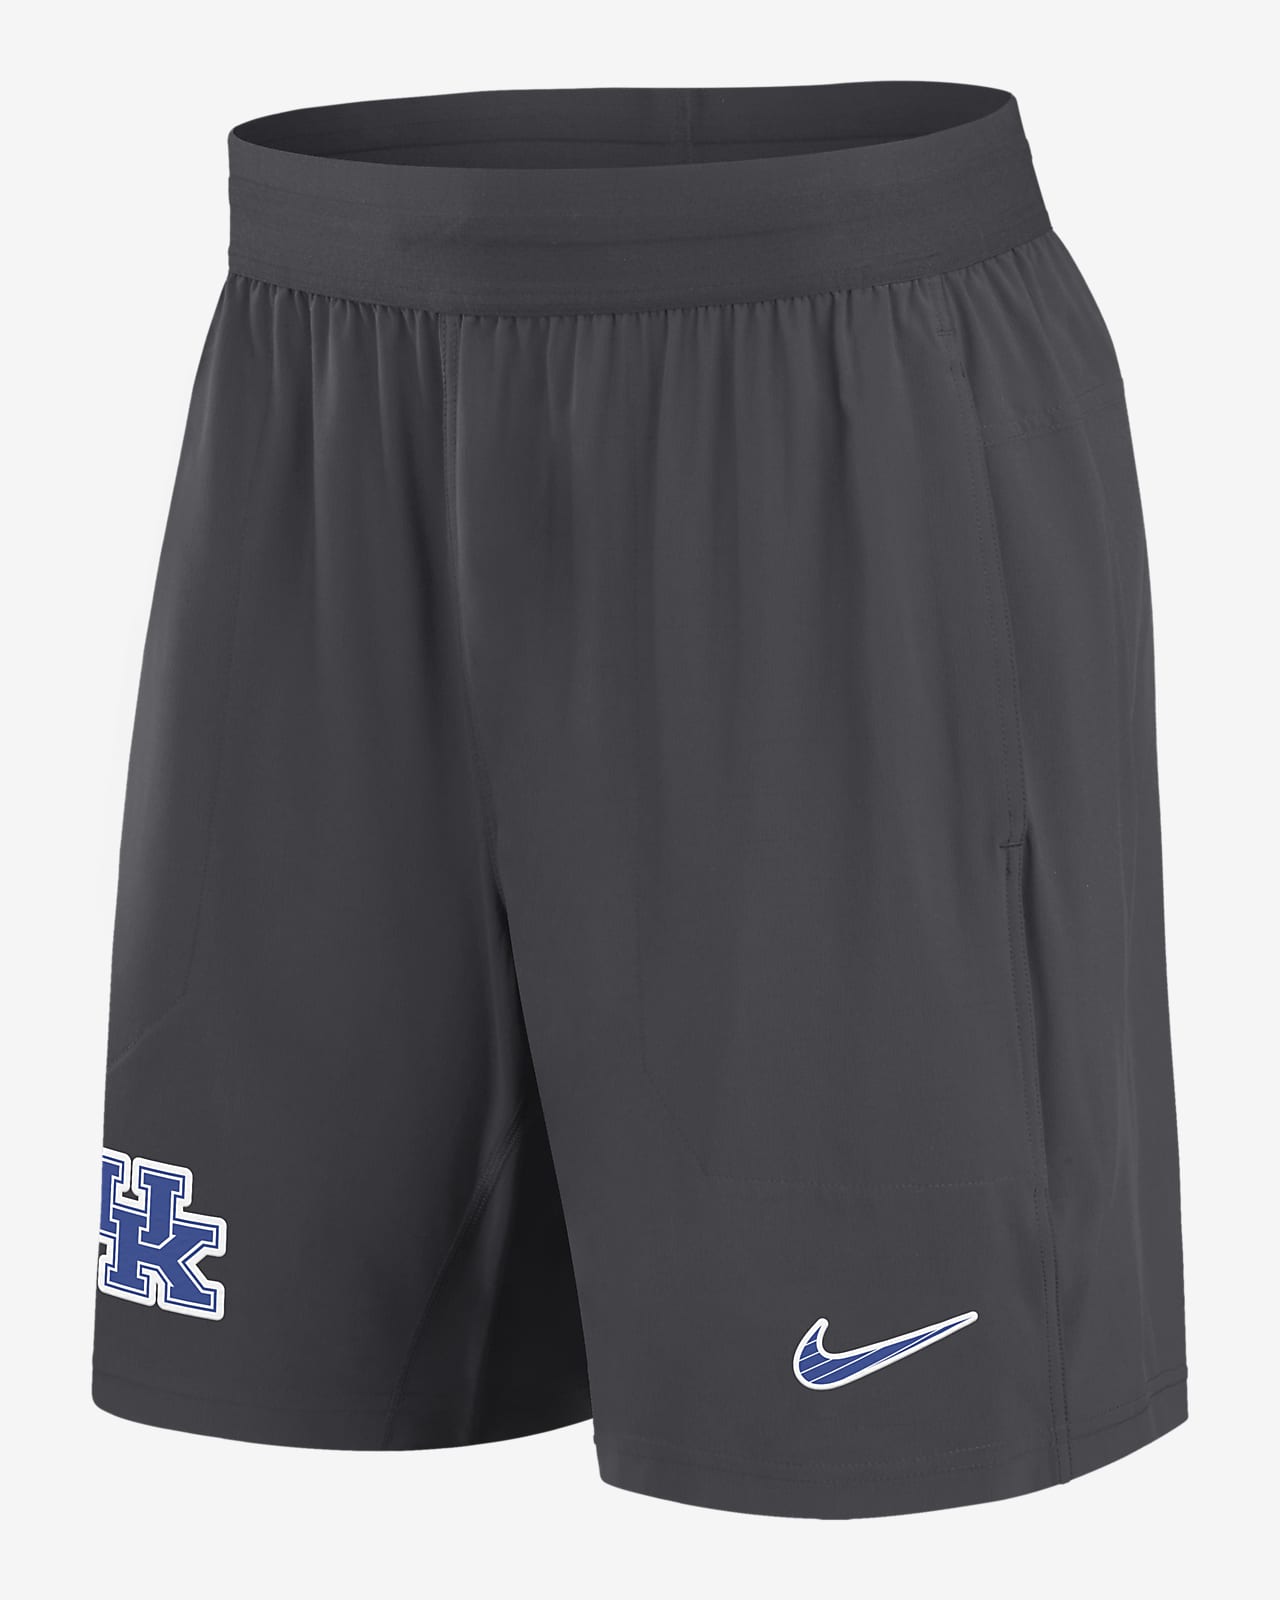 Shorts universitarios Nike Dri-FIT para hombre Kentucky Wildcats Sideline